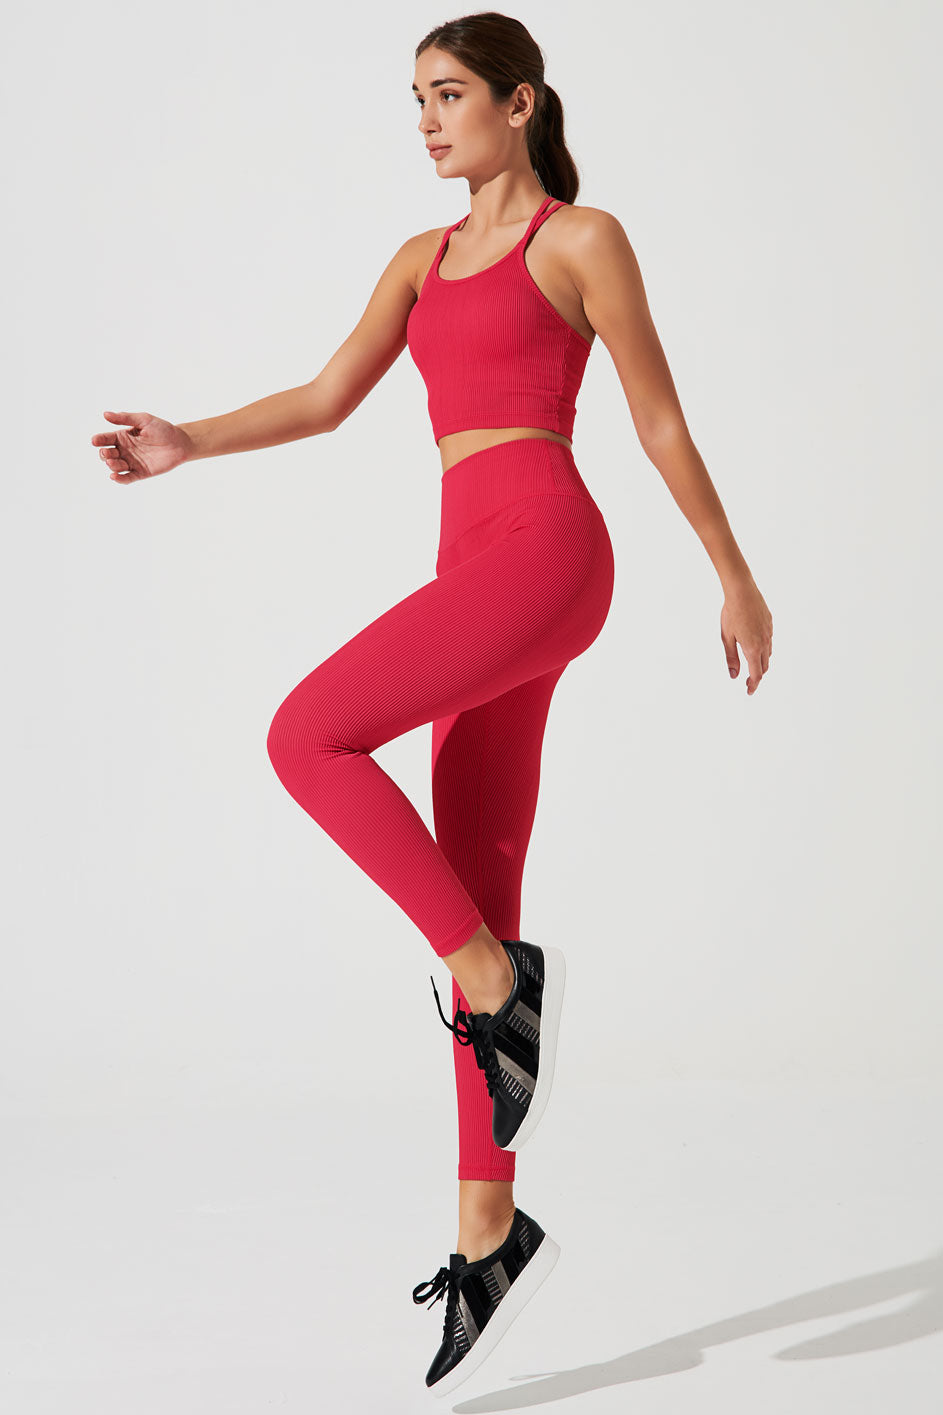 Cardinal pink high-waist leggings for women, size 4, in egrinma_78 design - OW-0141-WLG-PK.